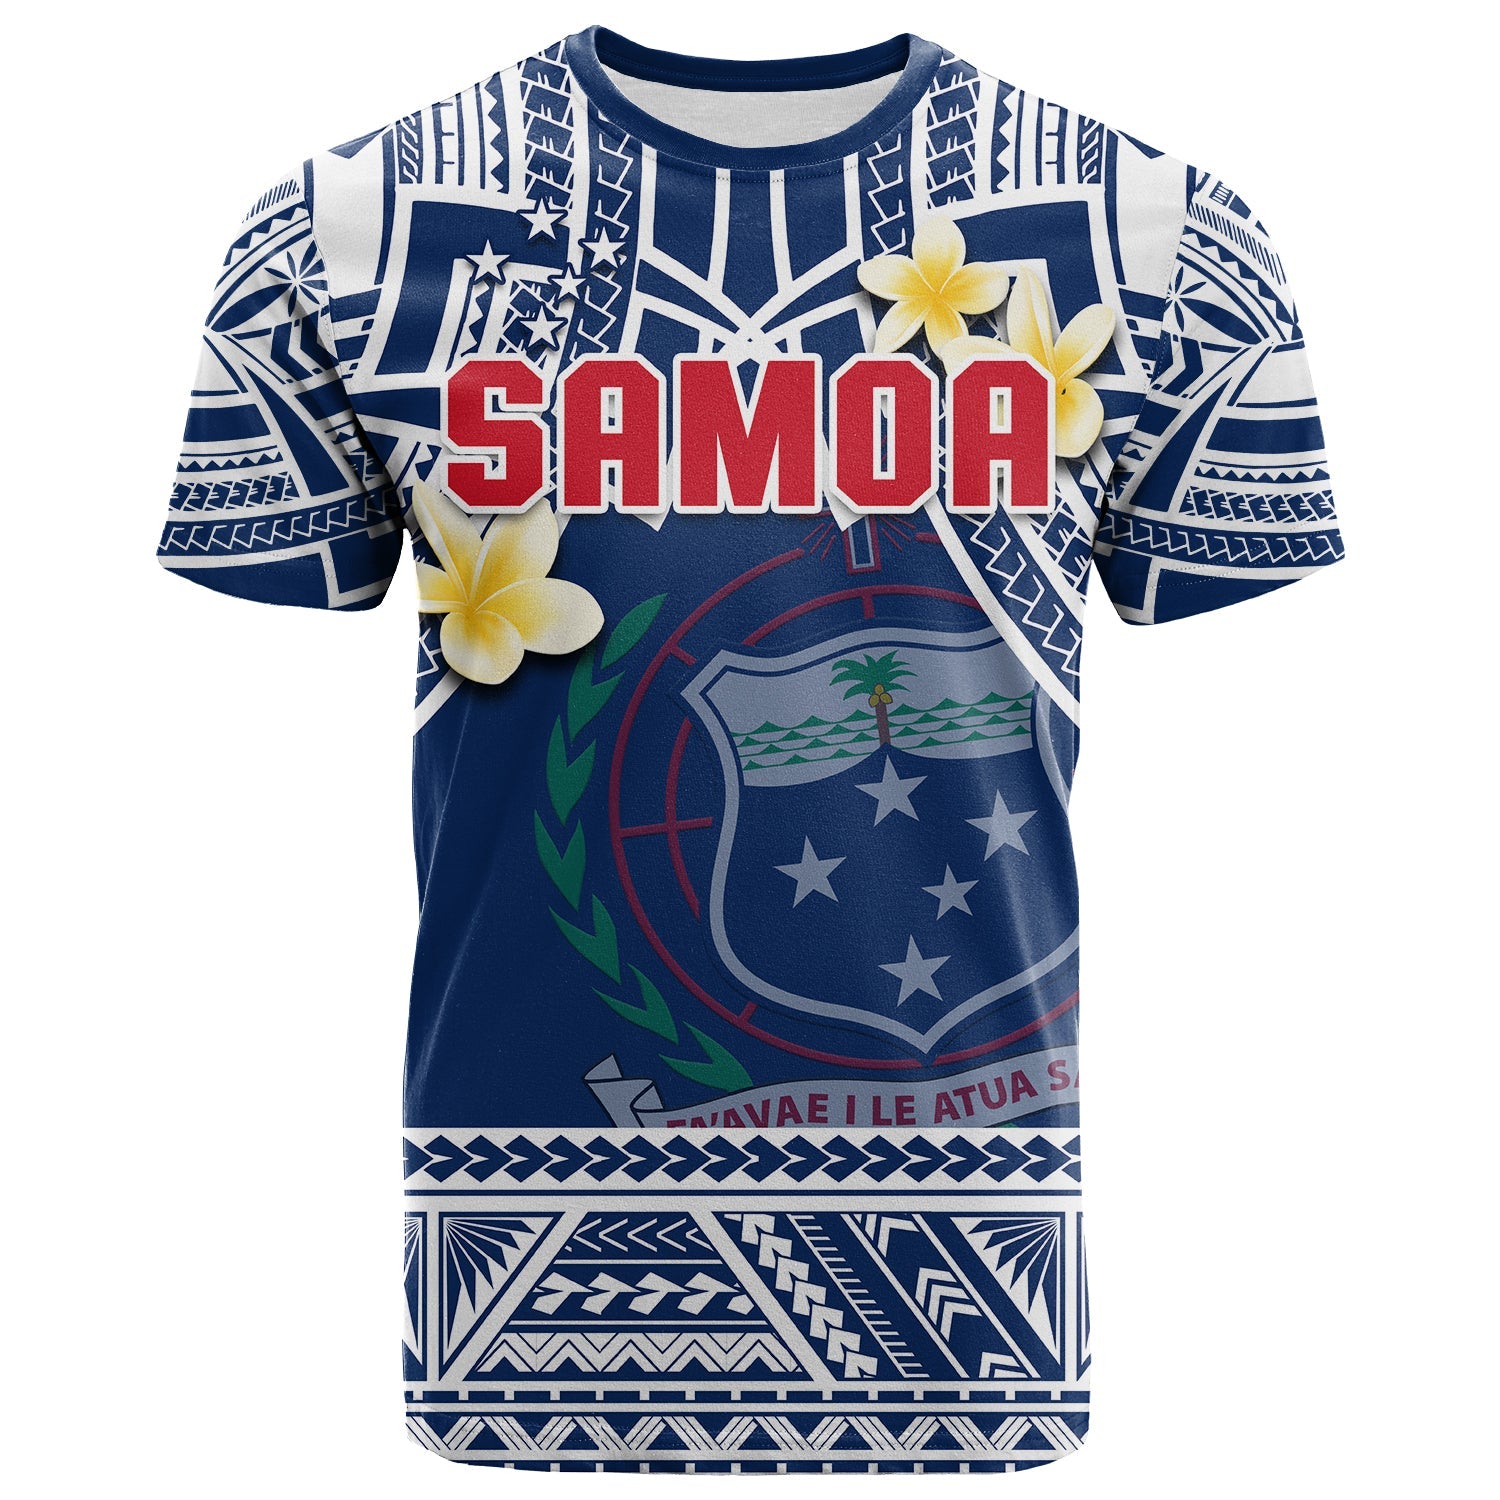 Samoa T Shirt Samoan Plumeria Flowers Mix Polynesian Pattern LT14 Adult Blue - Polynesian Pride